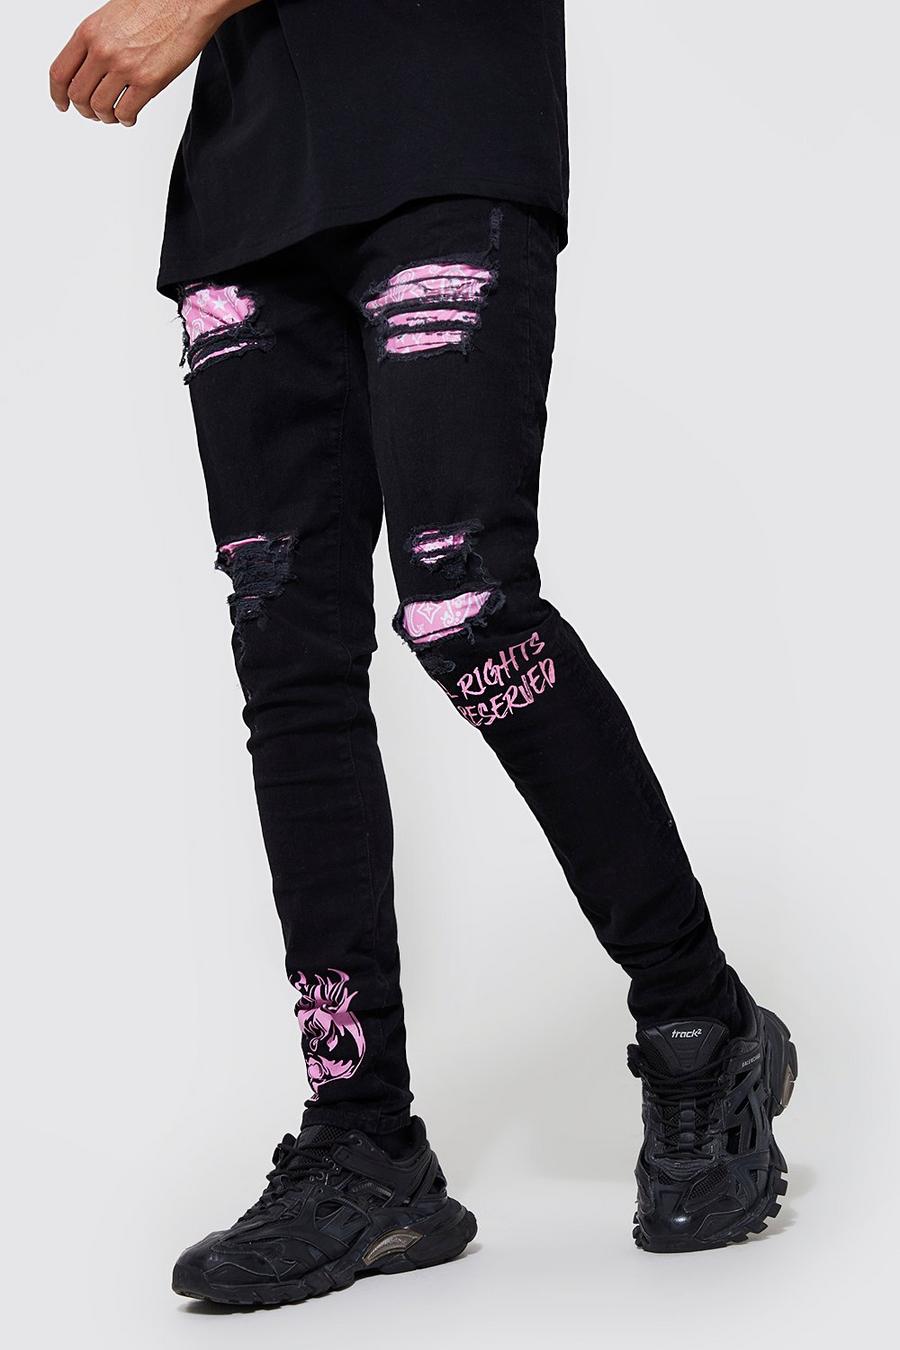 Black Tall Gescheurde Bandana Graffiti Skinny Jeans